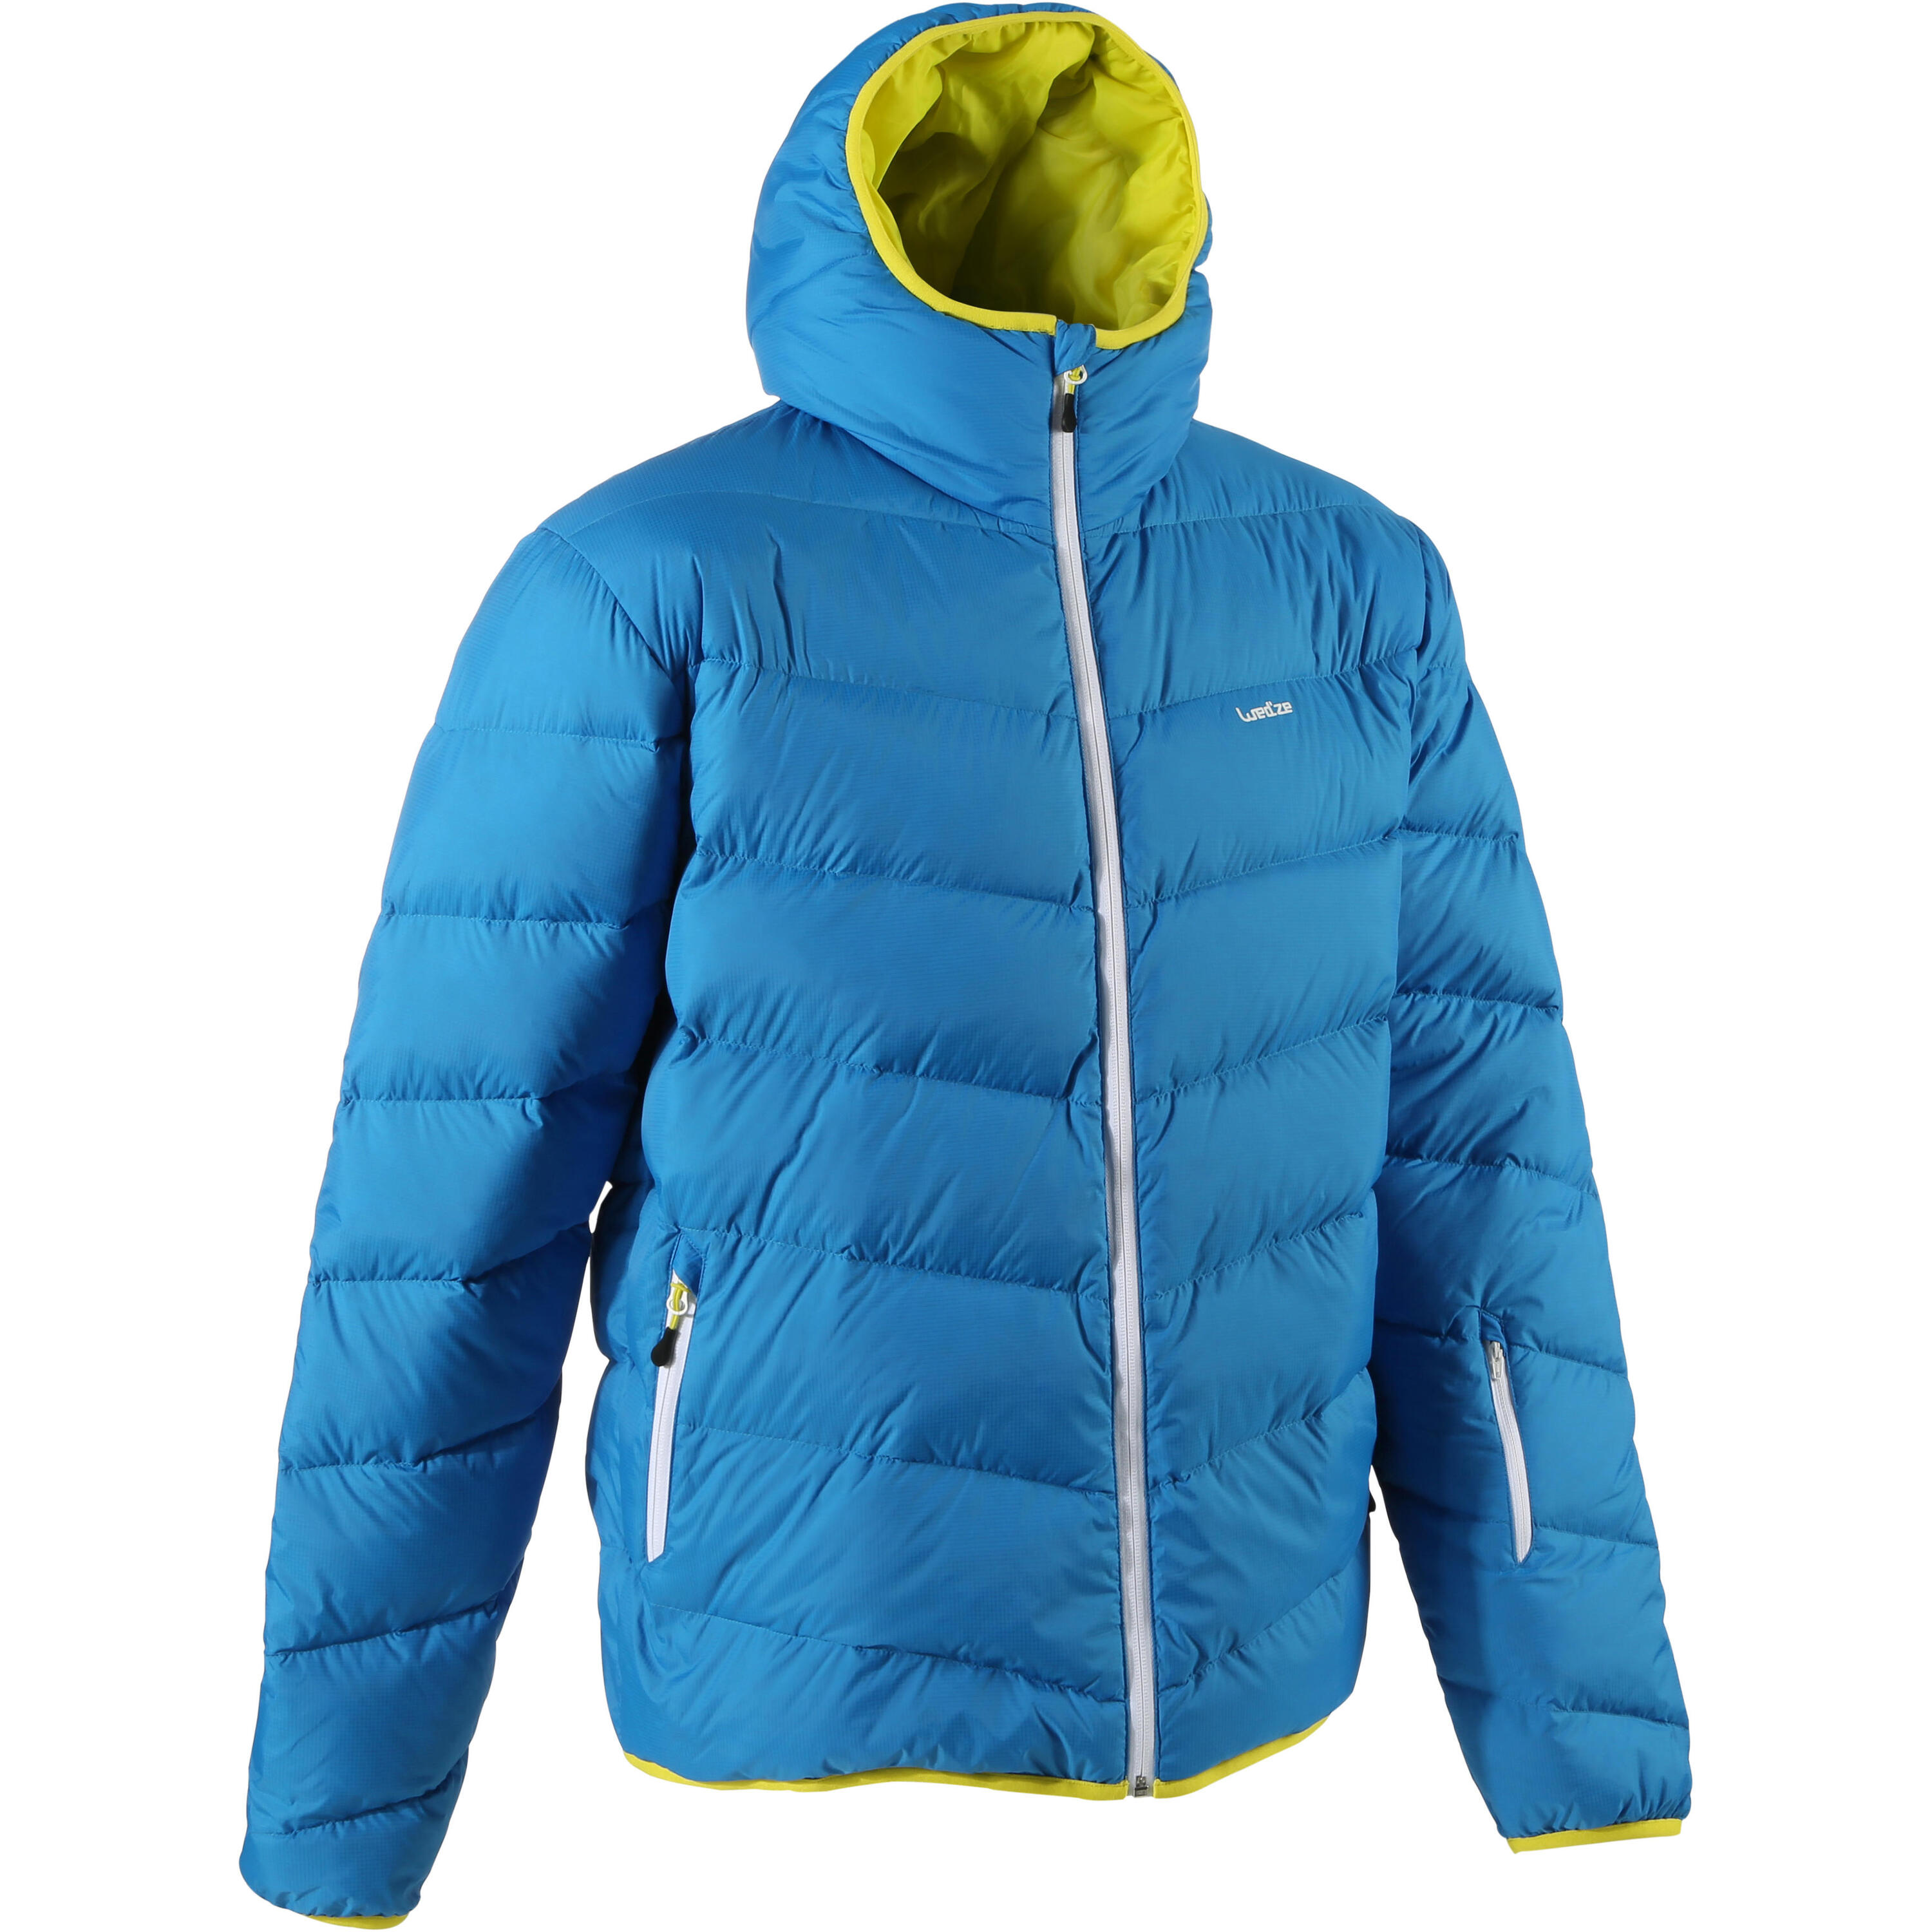 WEDZE Slide 300 Warm Men's Ski Jacket - Blue